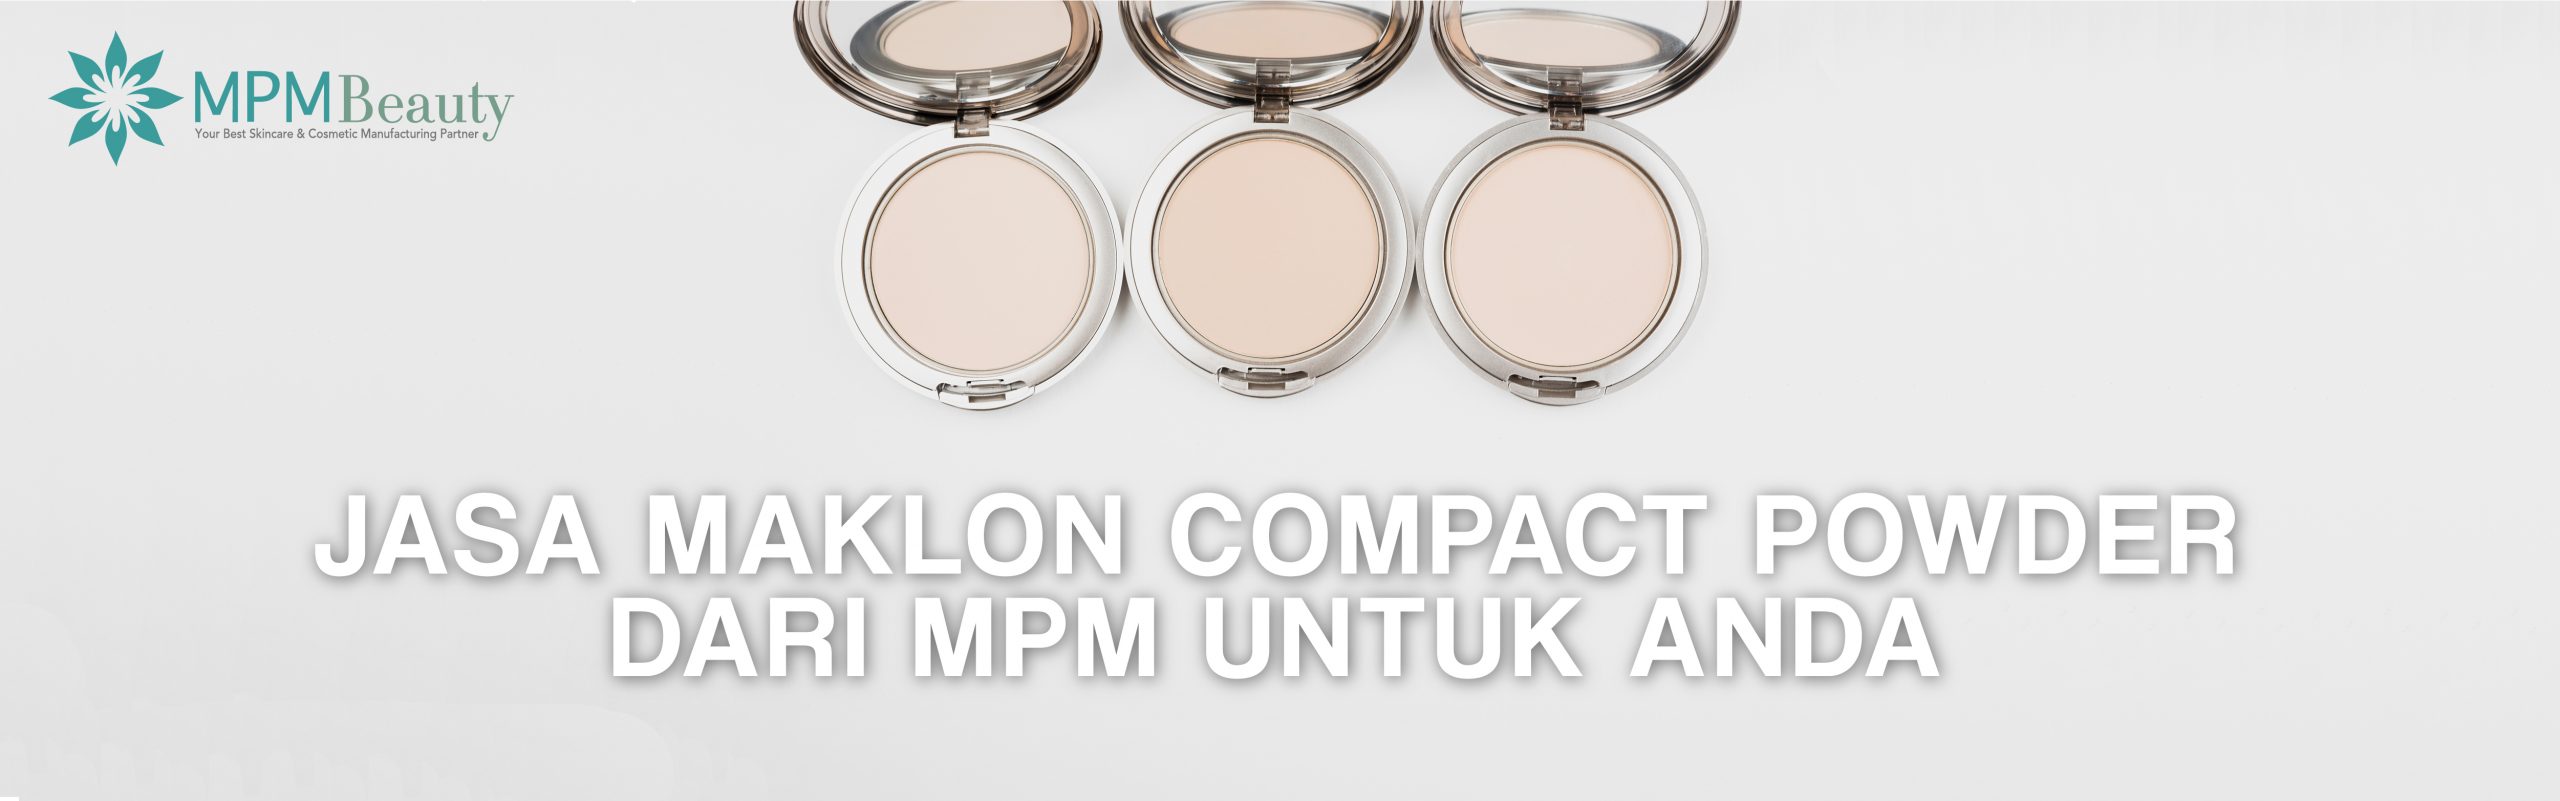 maklon Compact powder